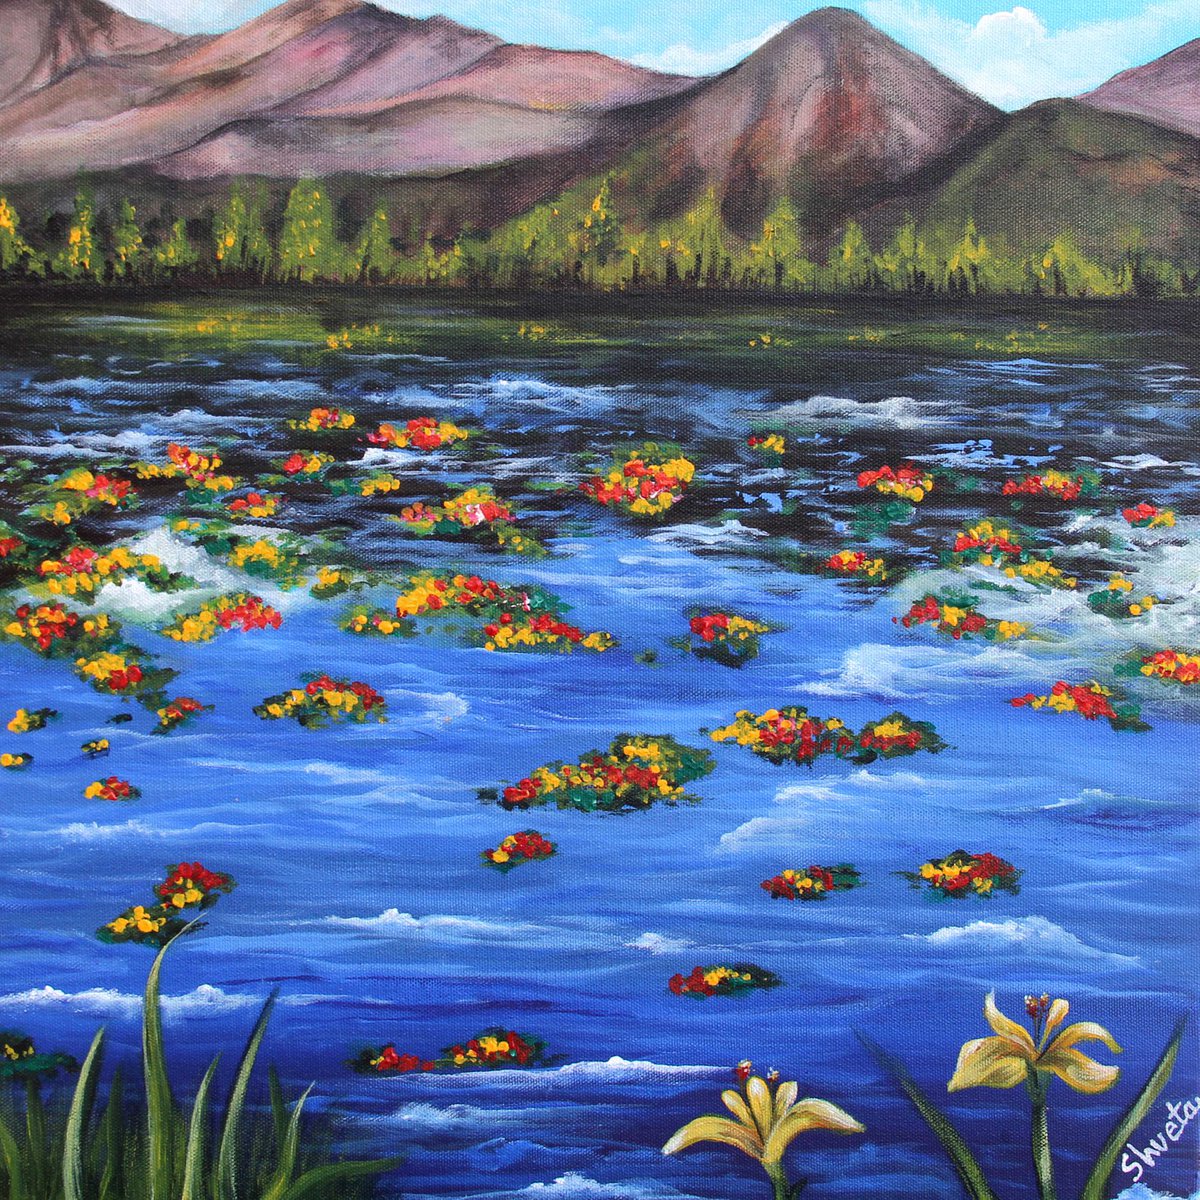 When the River Blooms by Shveta Saxena